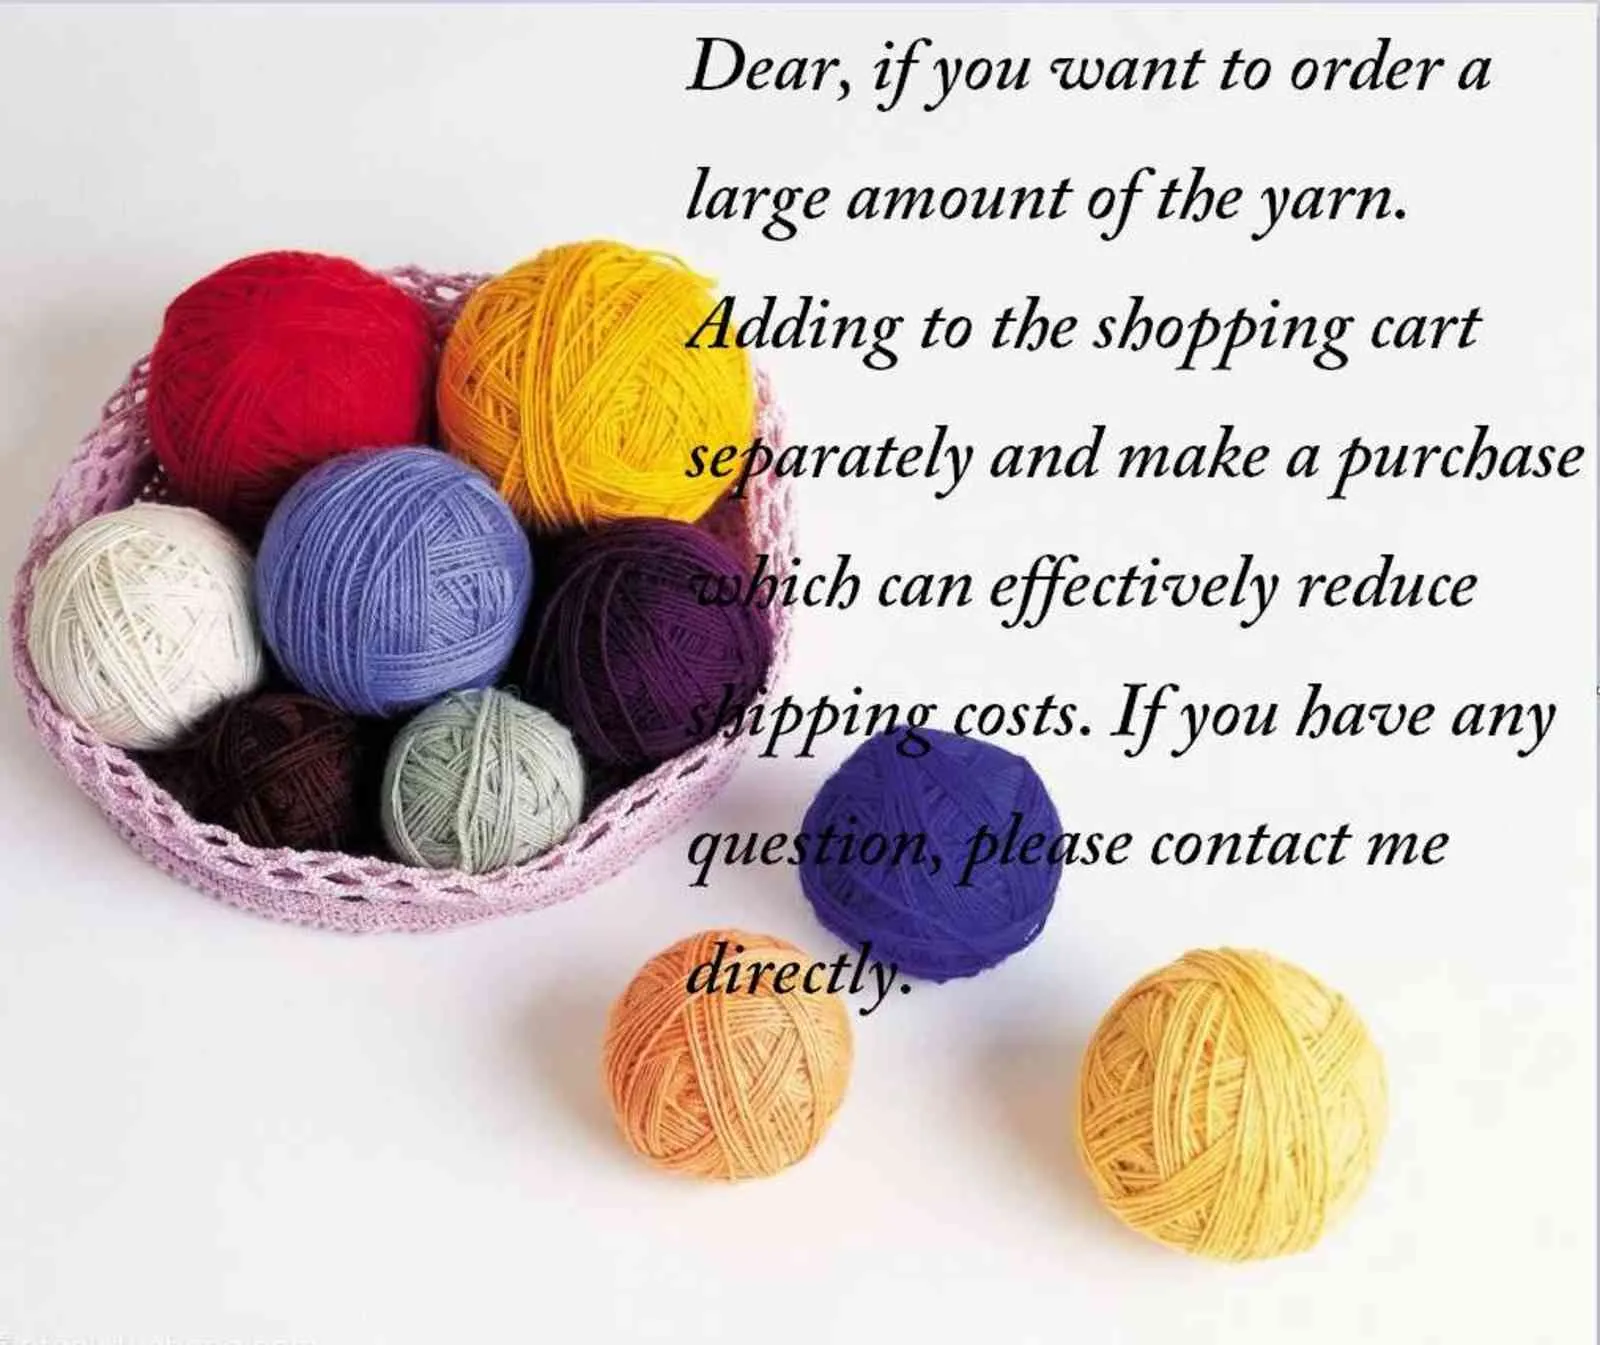 Hair Mink Yarn Faux Fur Yarn DIY Hand Knitting Crochet For Sweater